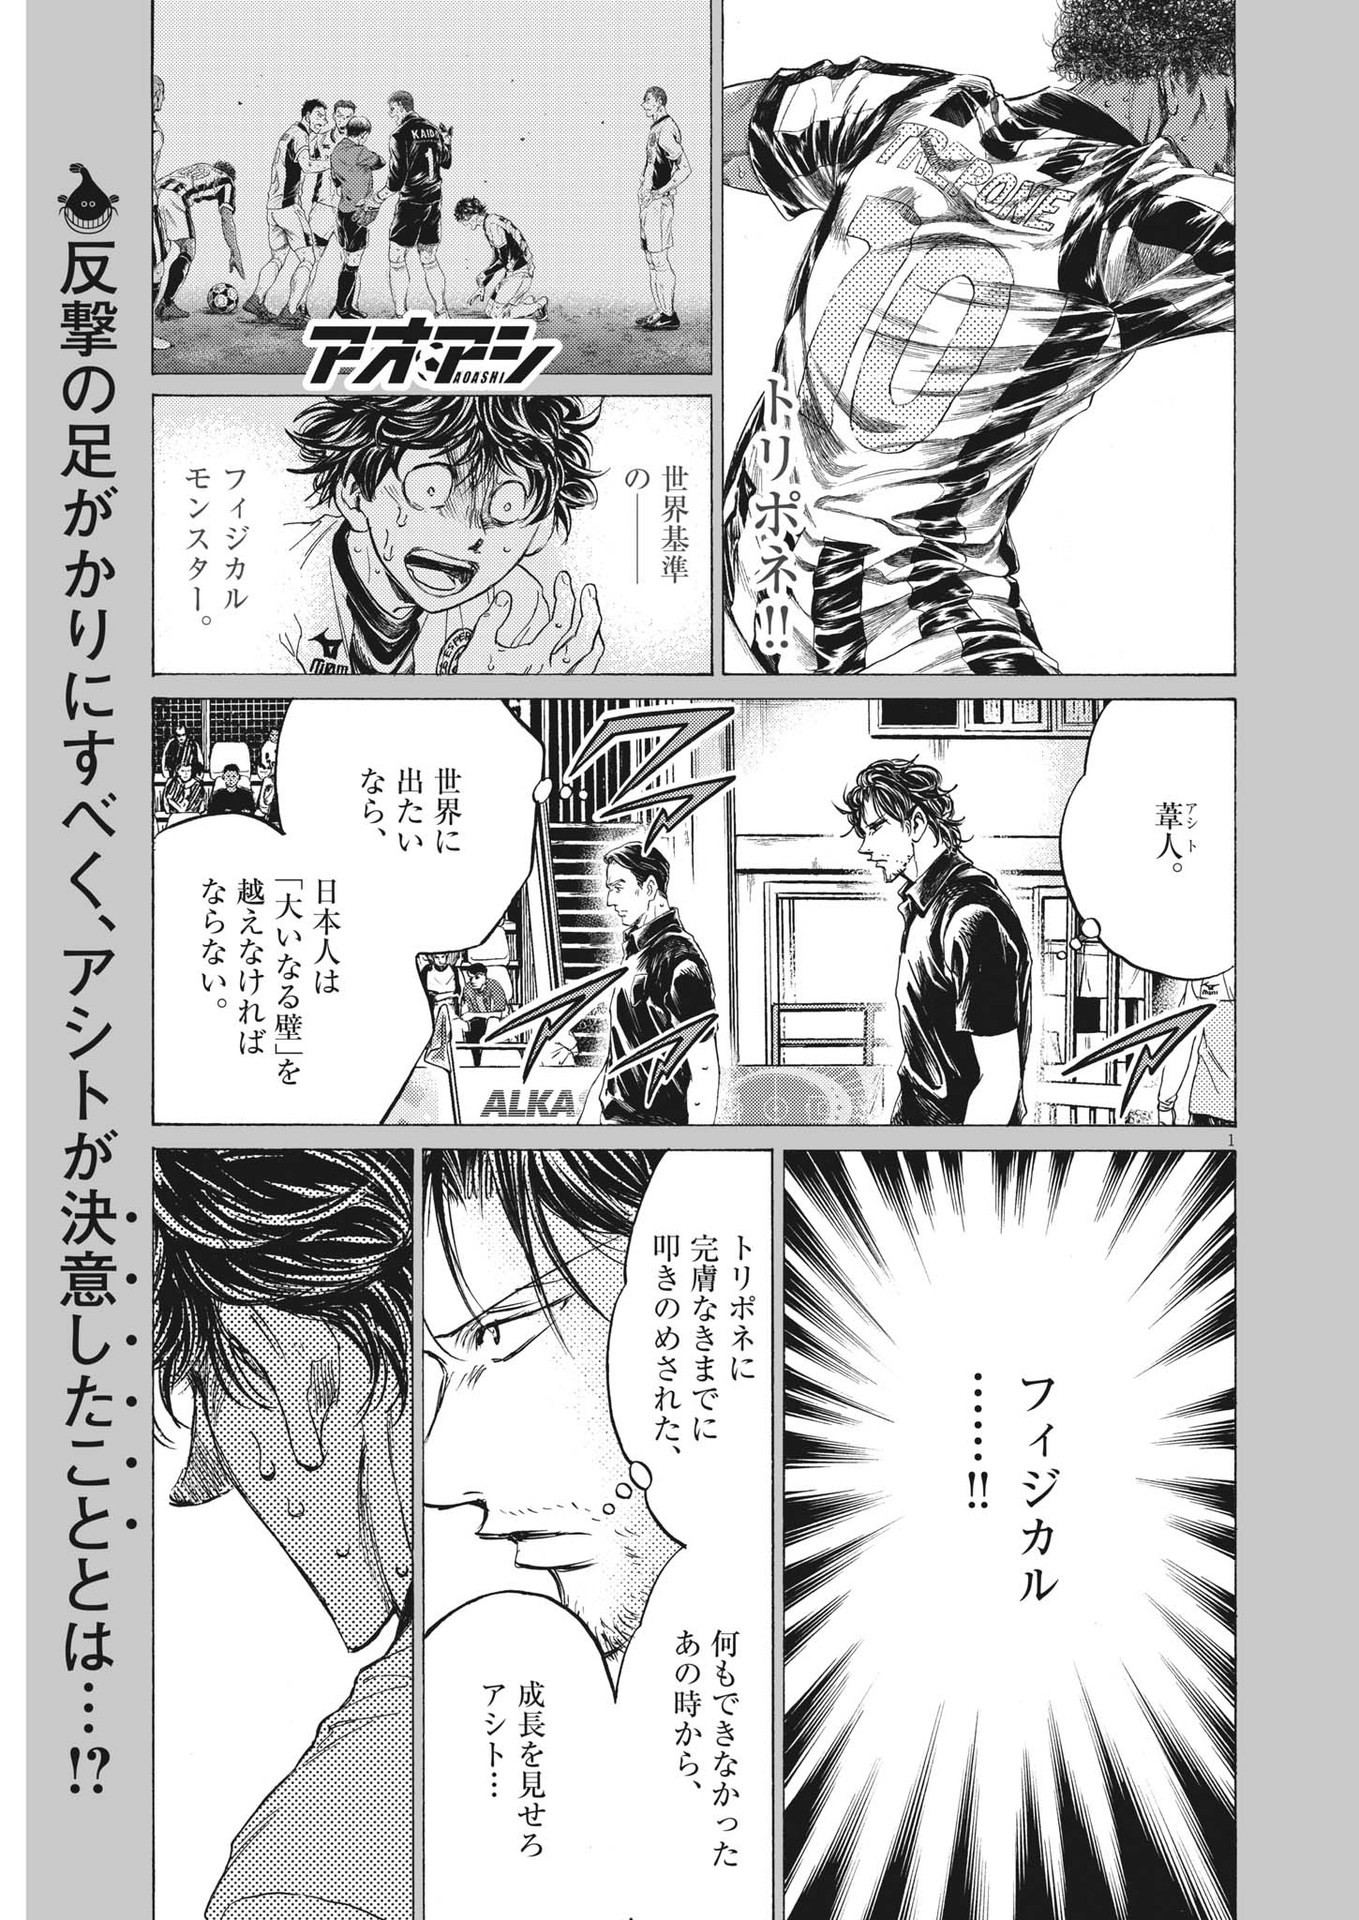 Ao Ashi - Chapter 364 - Page 1